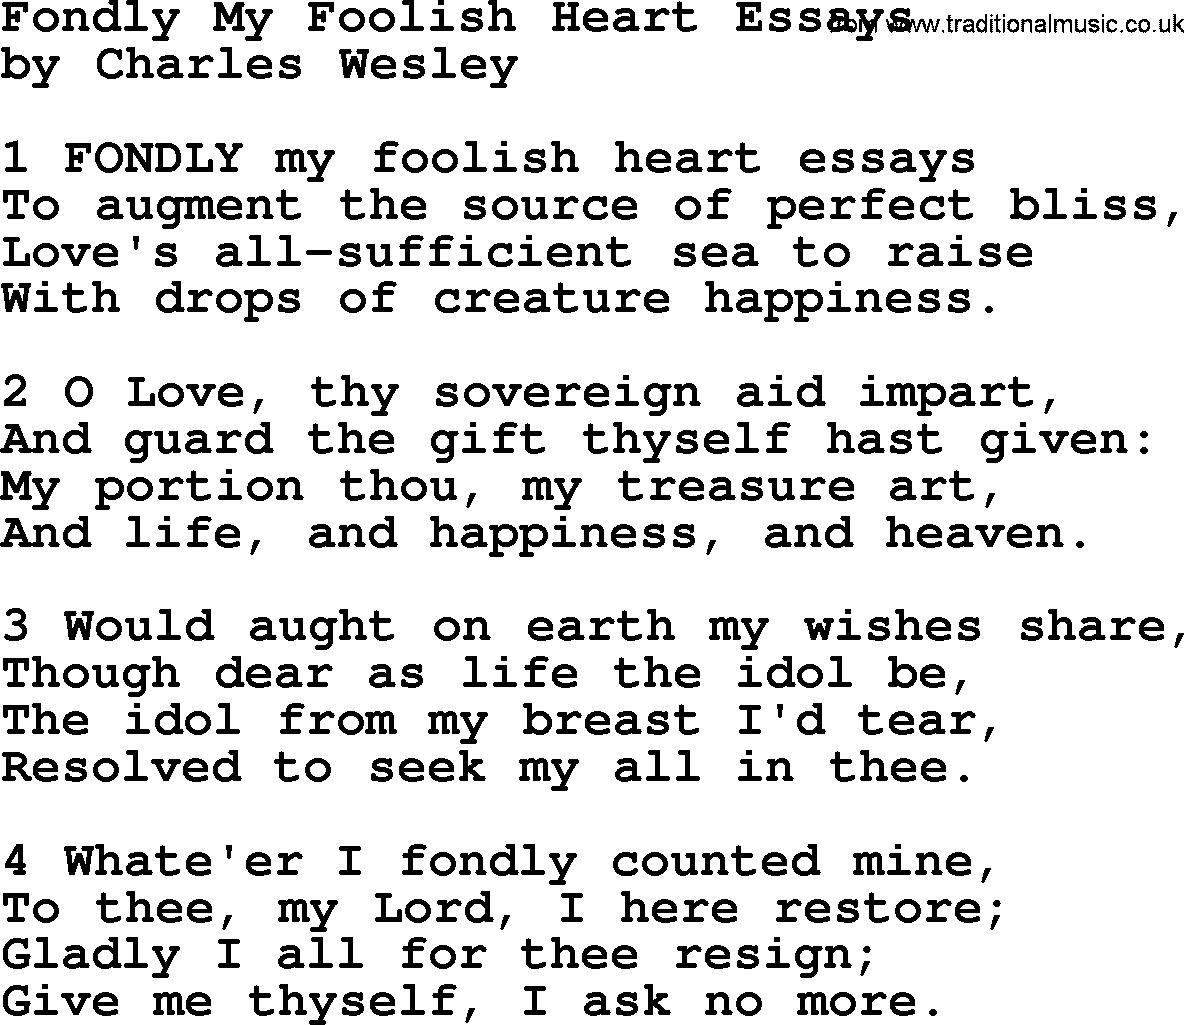 Charles Wesley hymn: Fondly My Foolish Heart Essays, lyrics